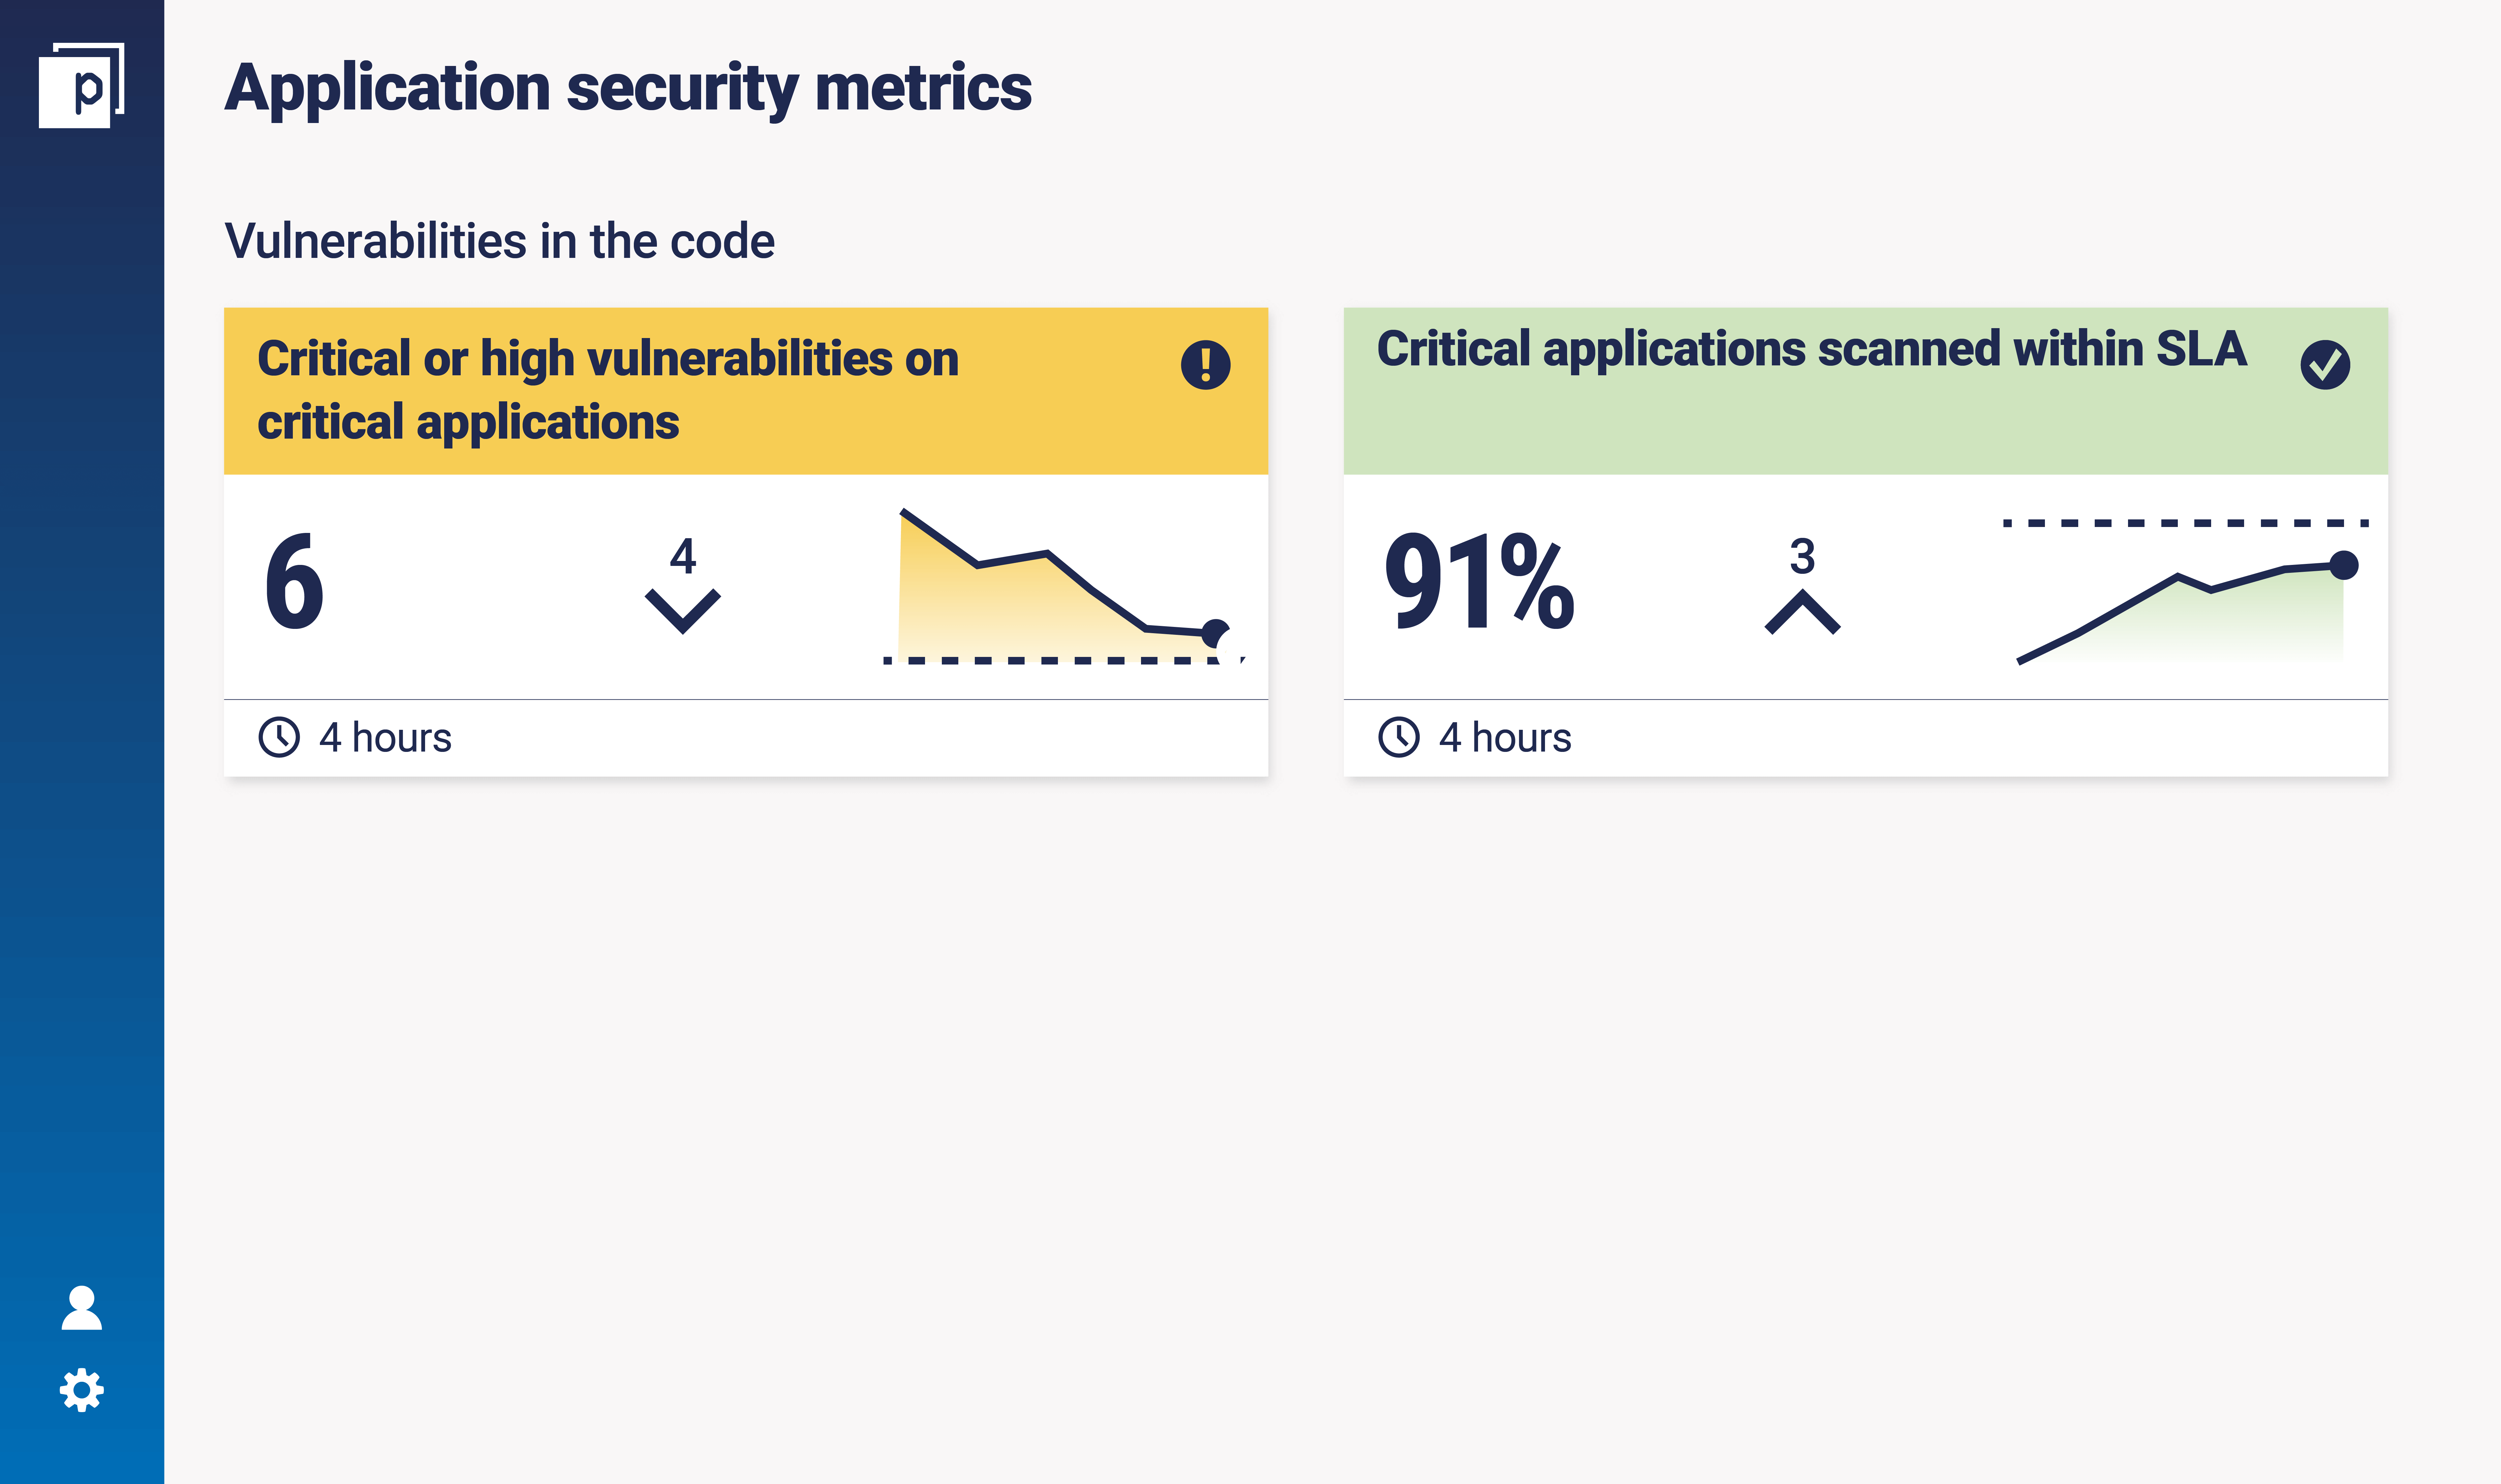 Application security metrics dashboard - vulnerabilities